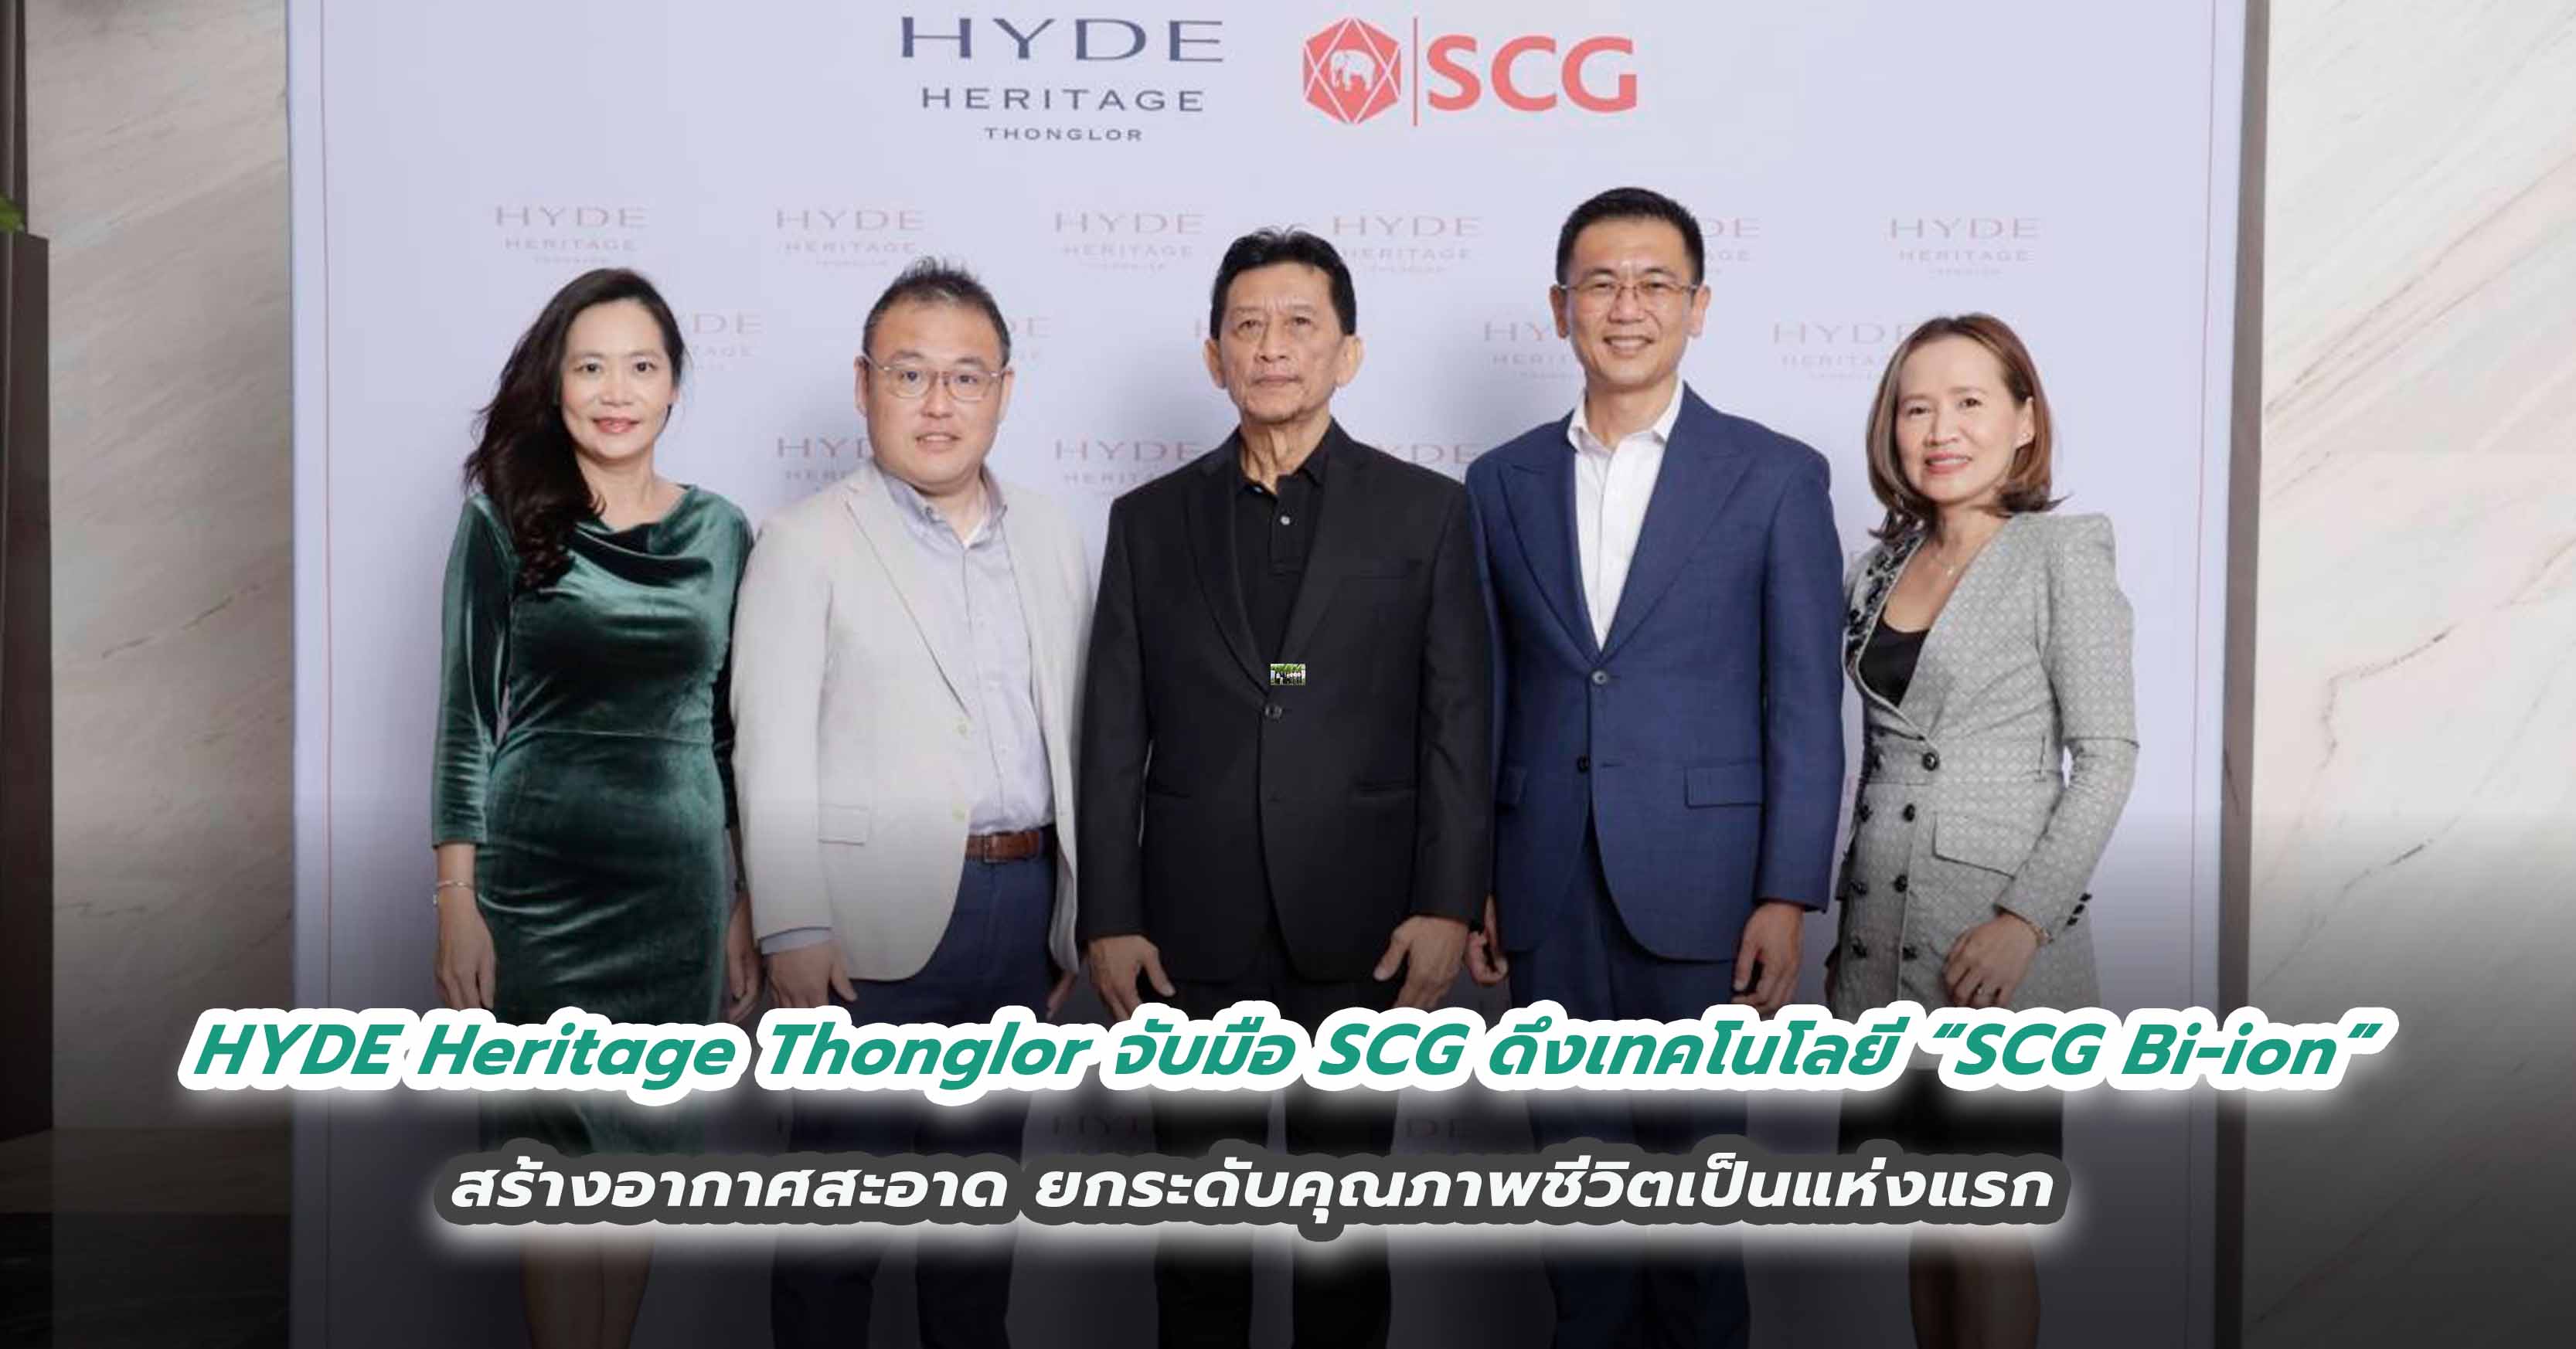 HYDE Heritage Thonglor จับมือ SCG ดึงเทคโนโลยี “SCG Bi-ion” สร้างอากาศสะอาด ยกระดับคุณภาพชีวิตเป็นแห่งแรก